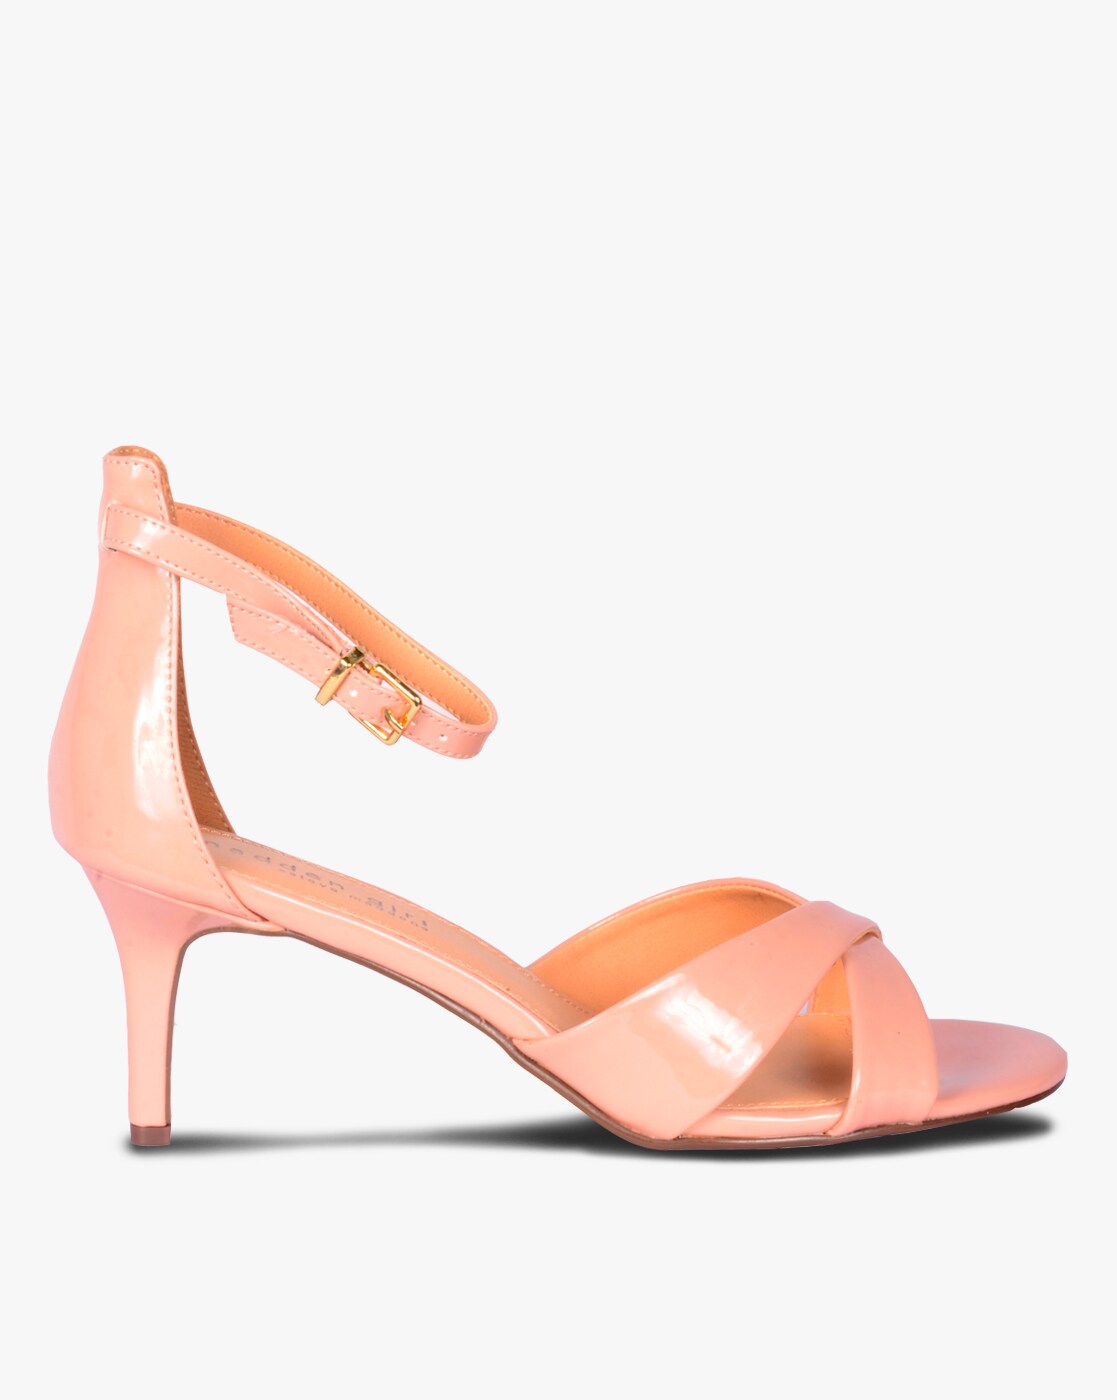 madden girl pink heels